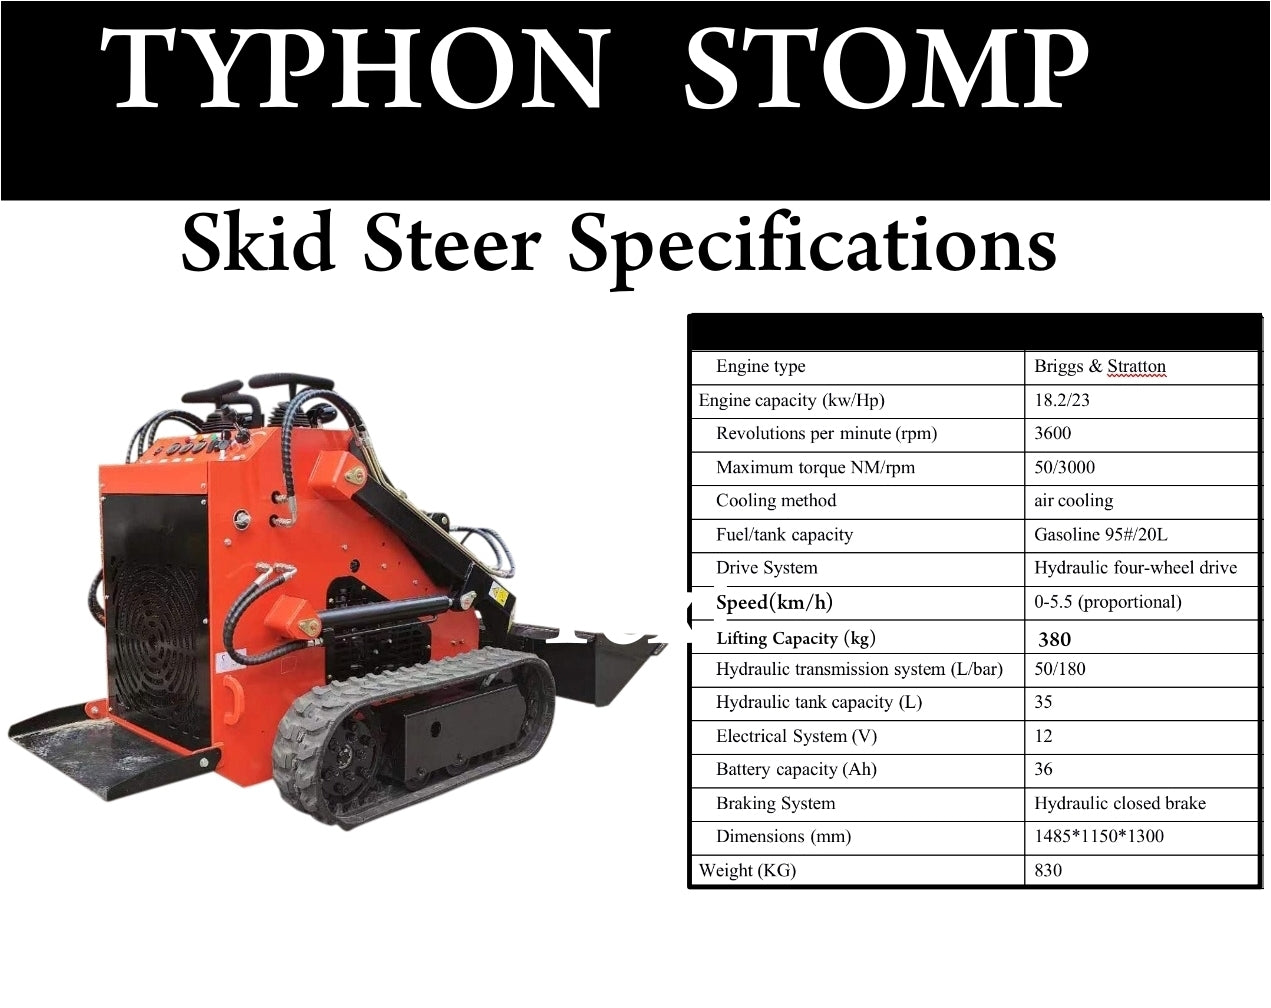 Brand New TYPHON STOMP 1,800lbs Mini Skid Steer 23HP Gas EPA B & S Engine